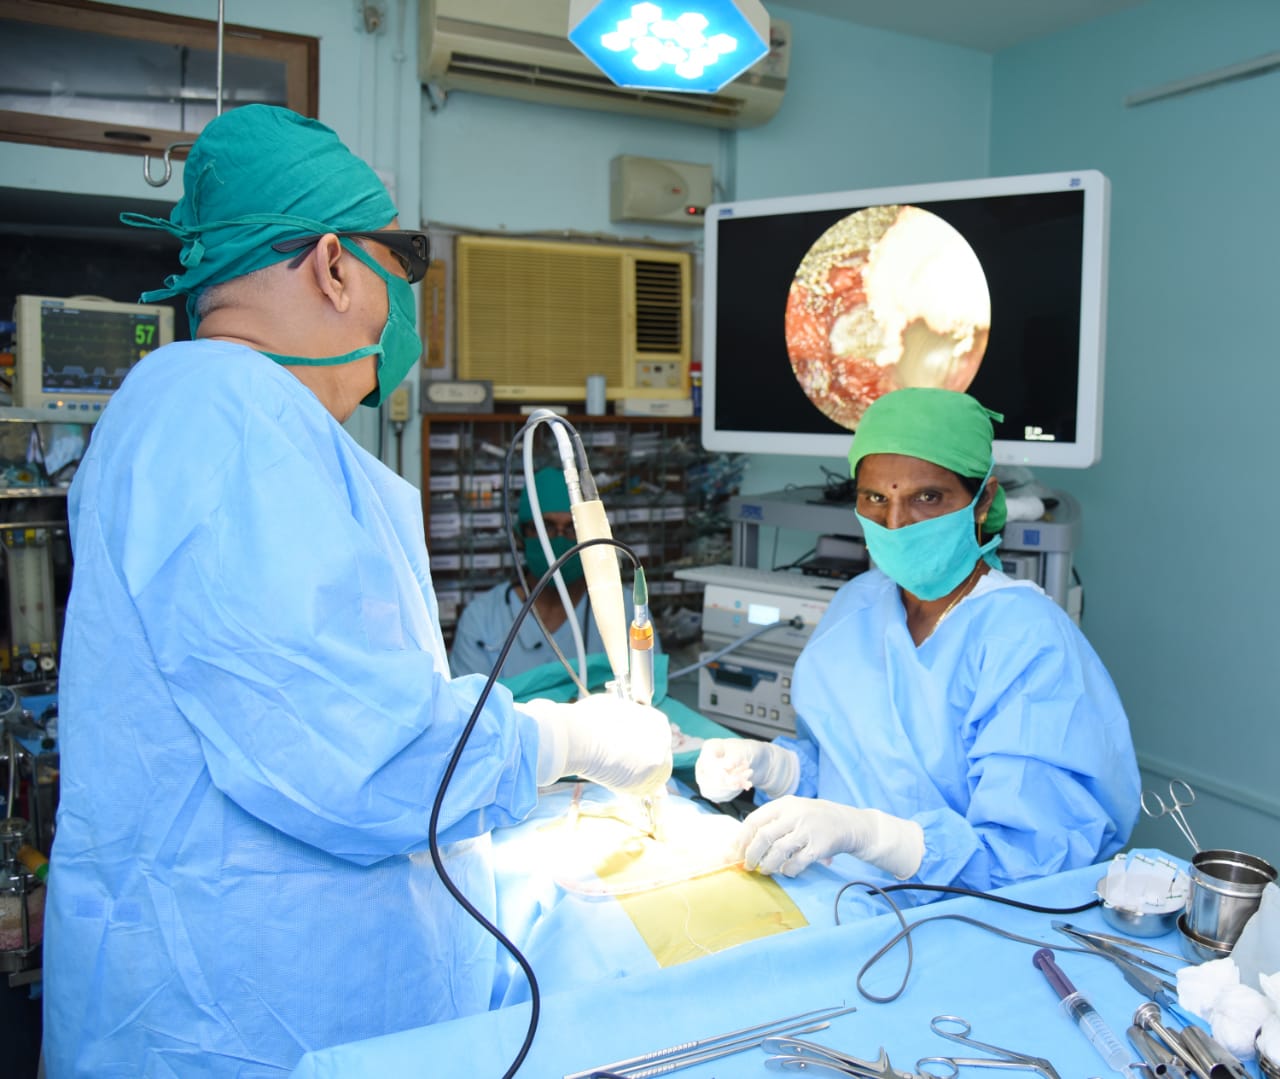 Dr. Rohidas' Centre for Minimally Invasive Spine & Neurosurgery - www.rohidas-endospine.com